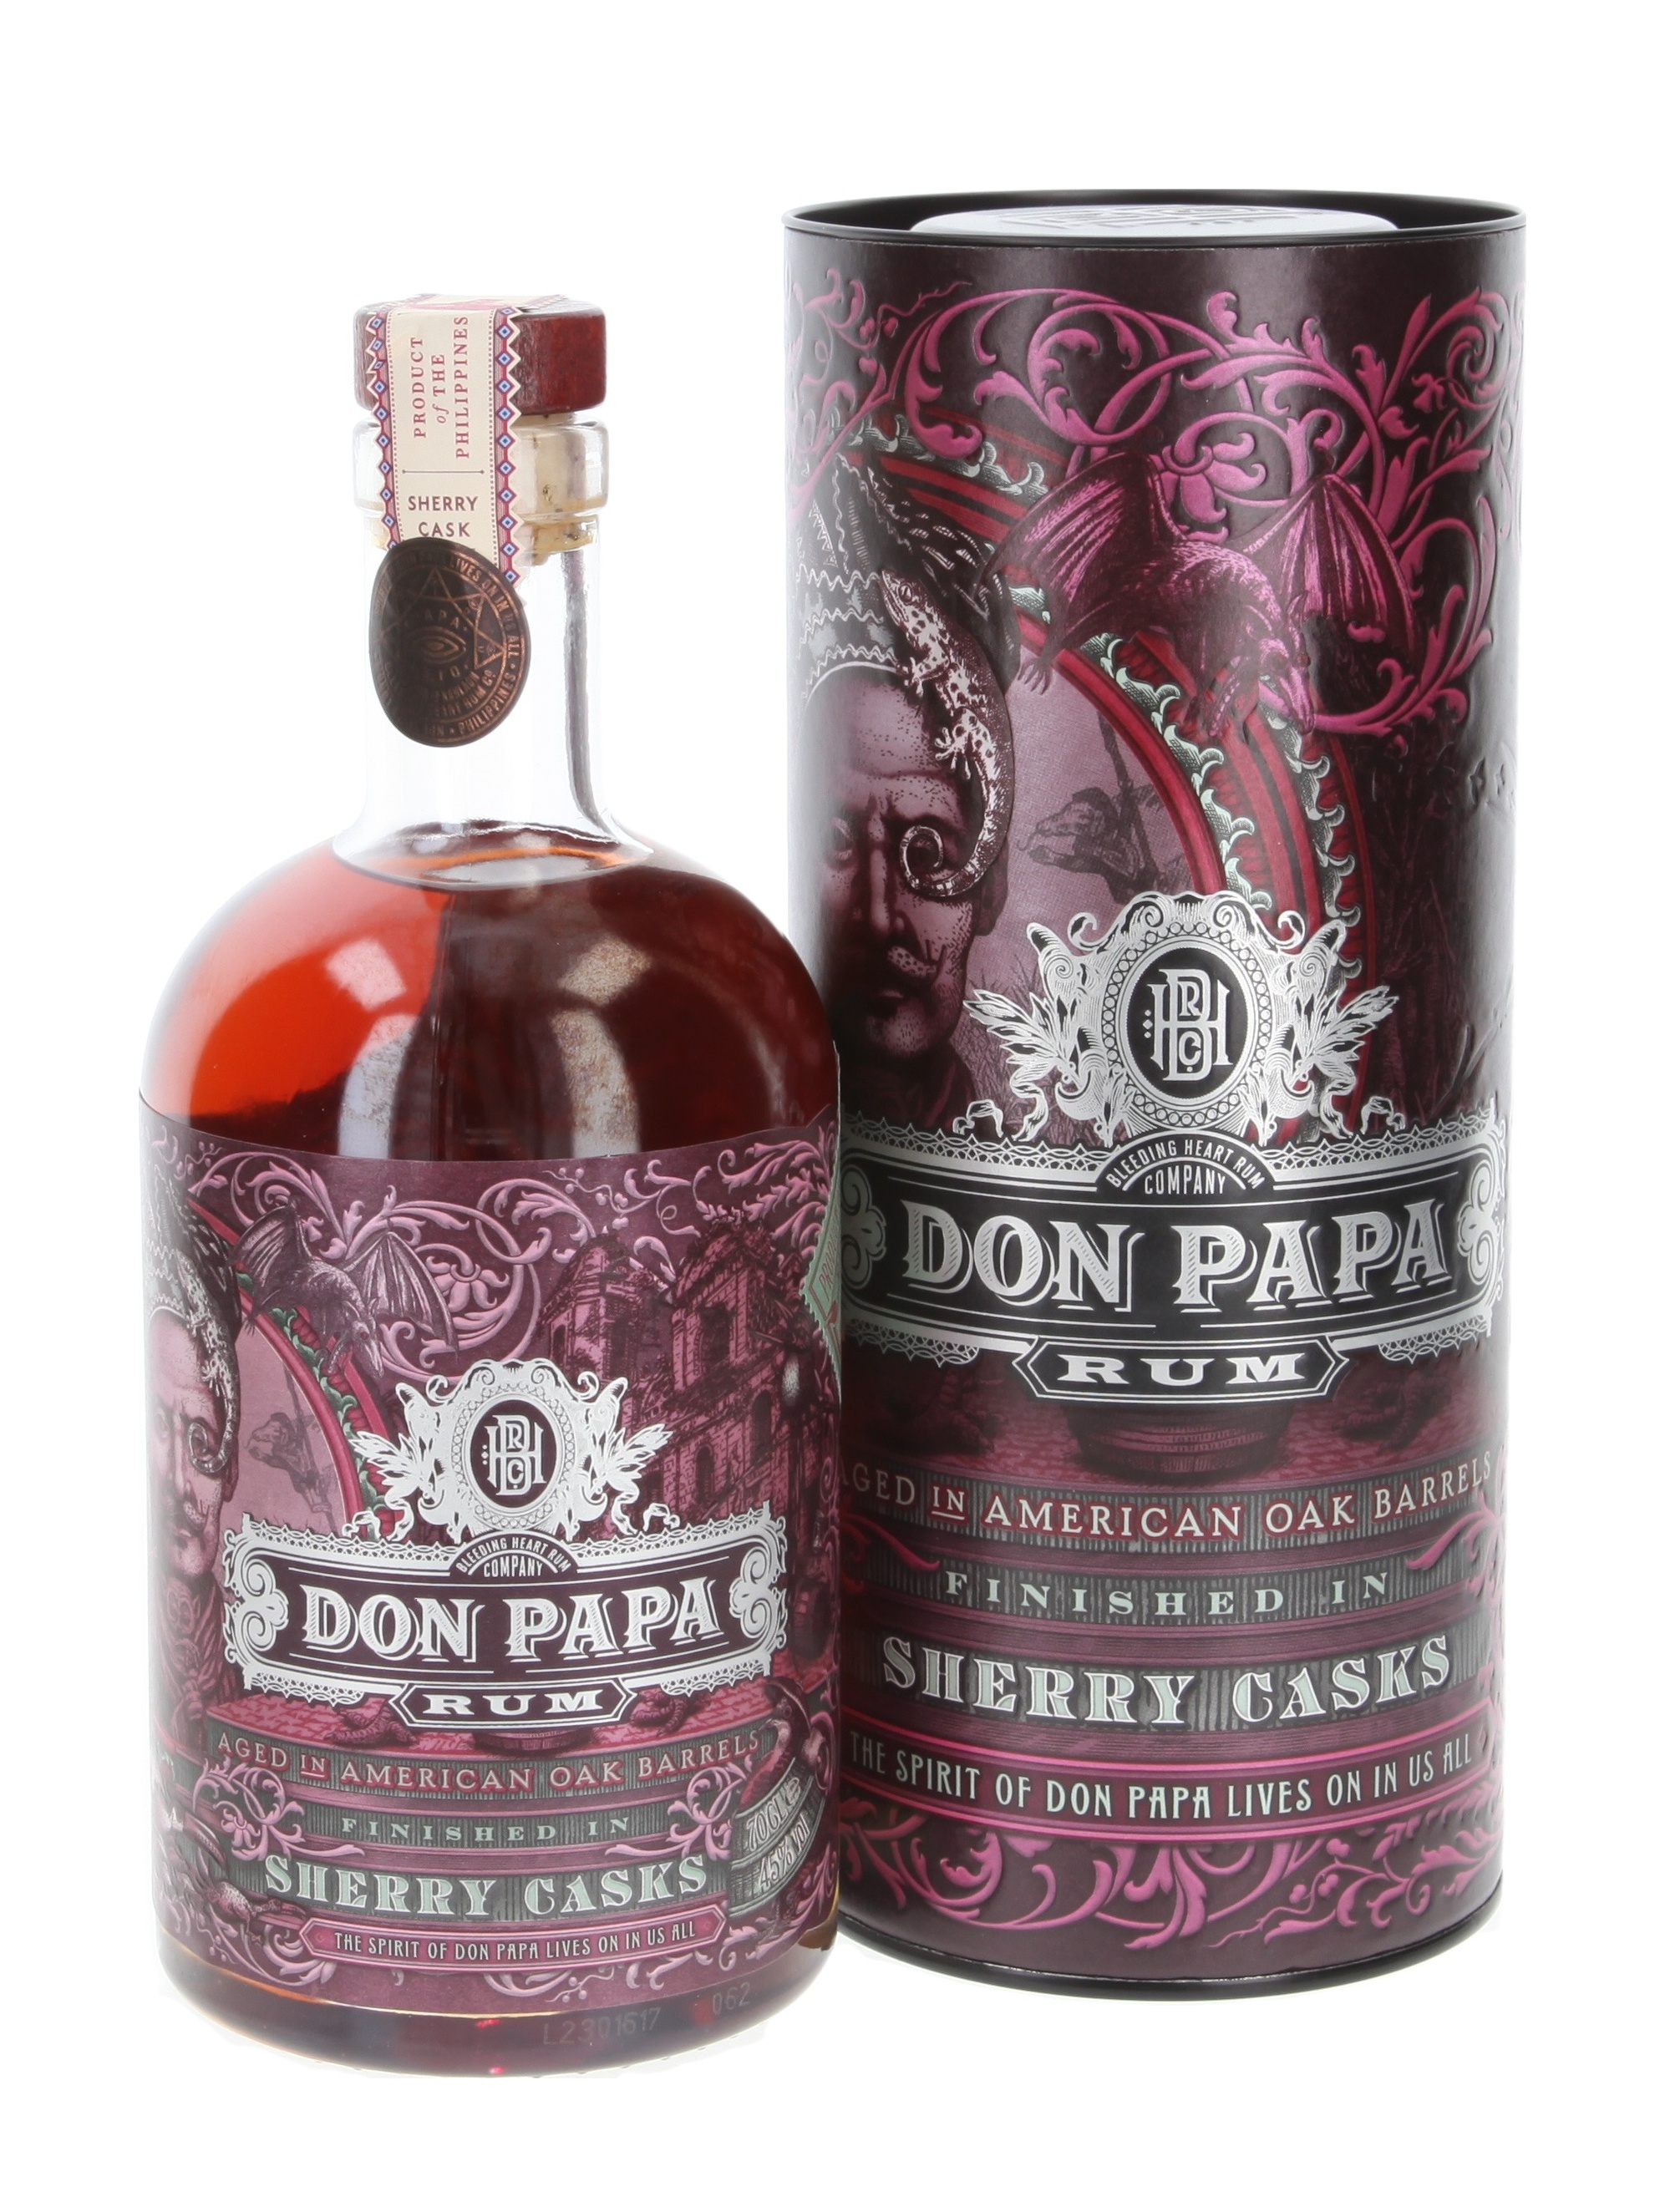 Don Papa Rum Sherry Cask  Whisky.de Austria » To the online store